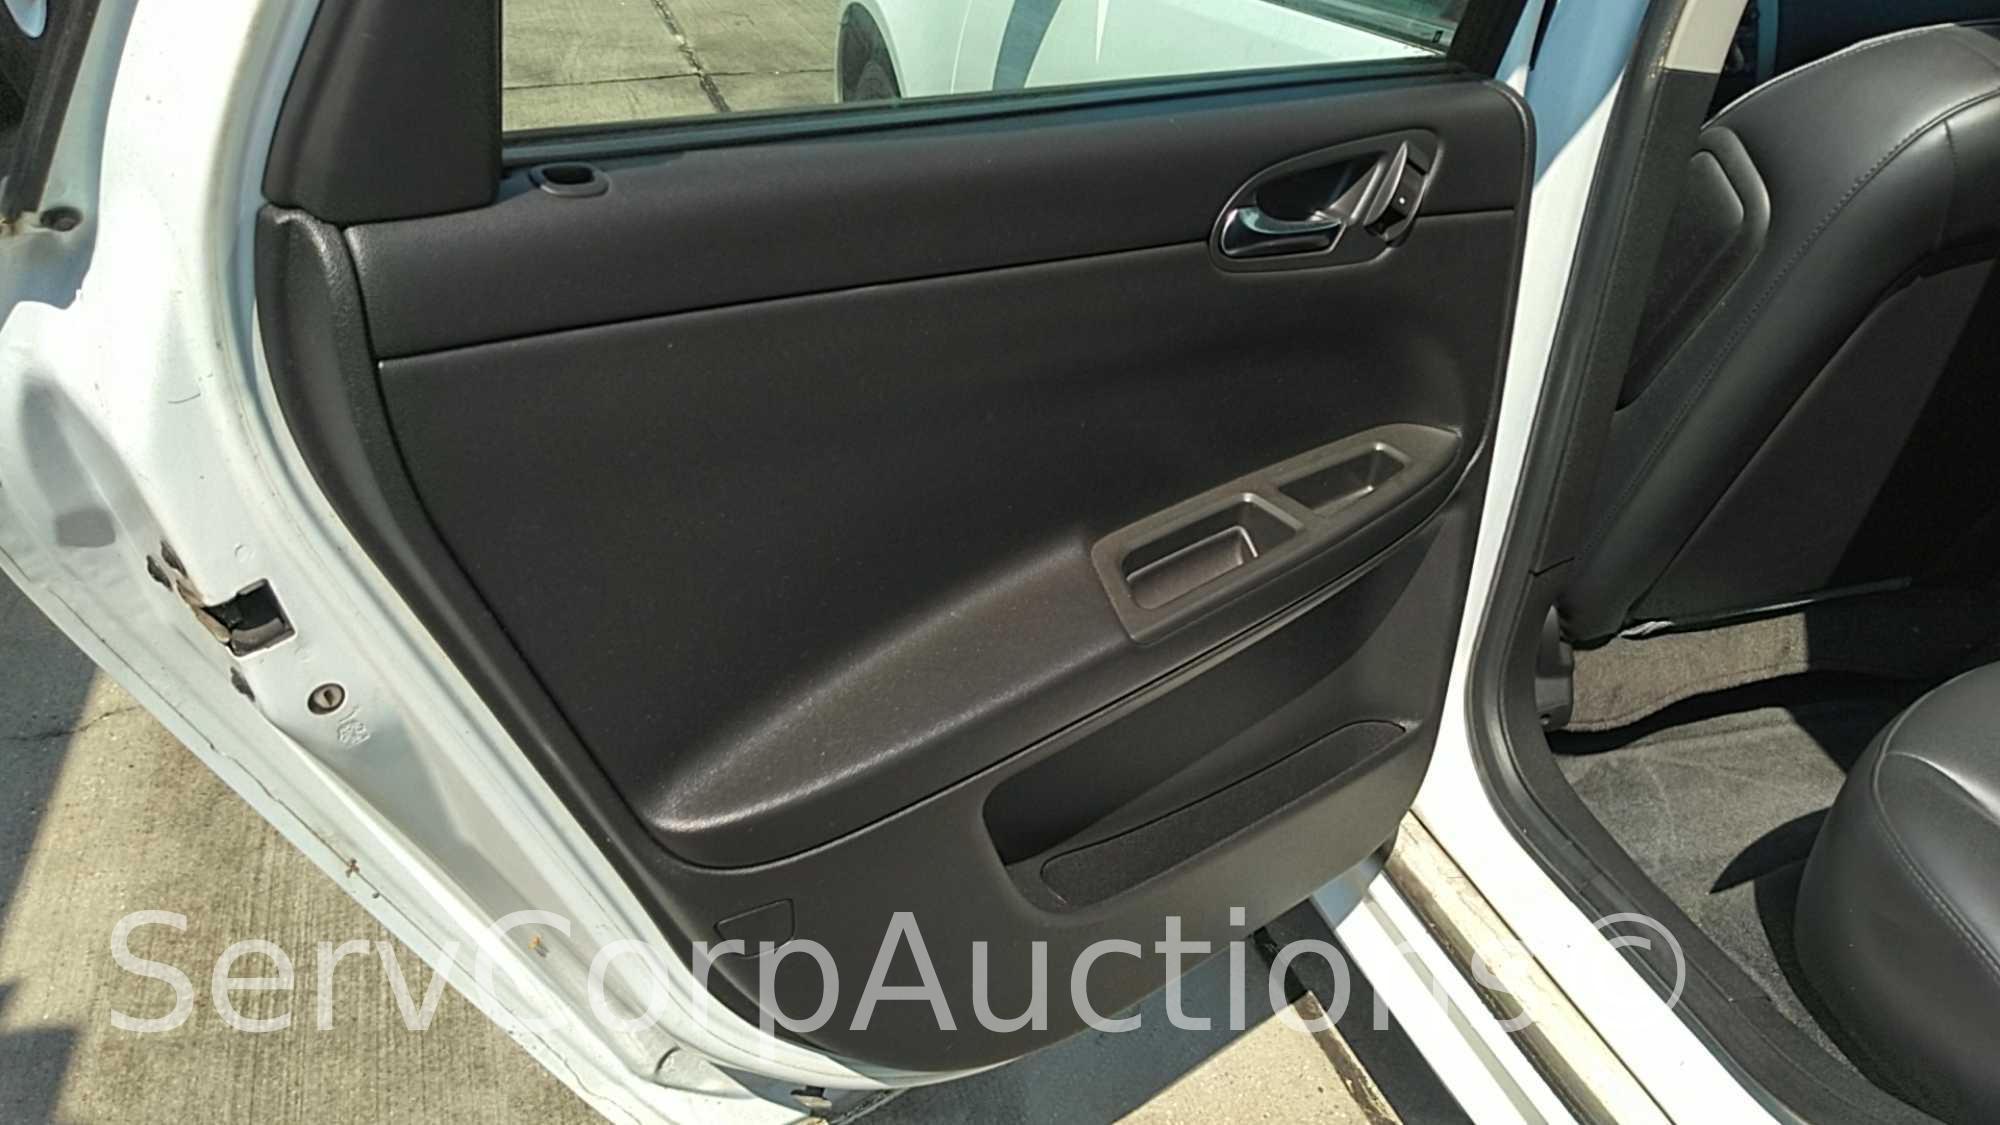 2010 Chevrolet Impala Passenger Car, VIN # 2G1WD5EM6A1238716